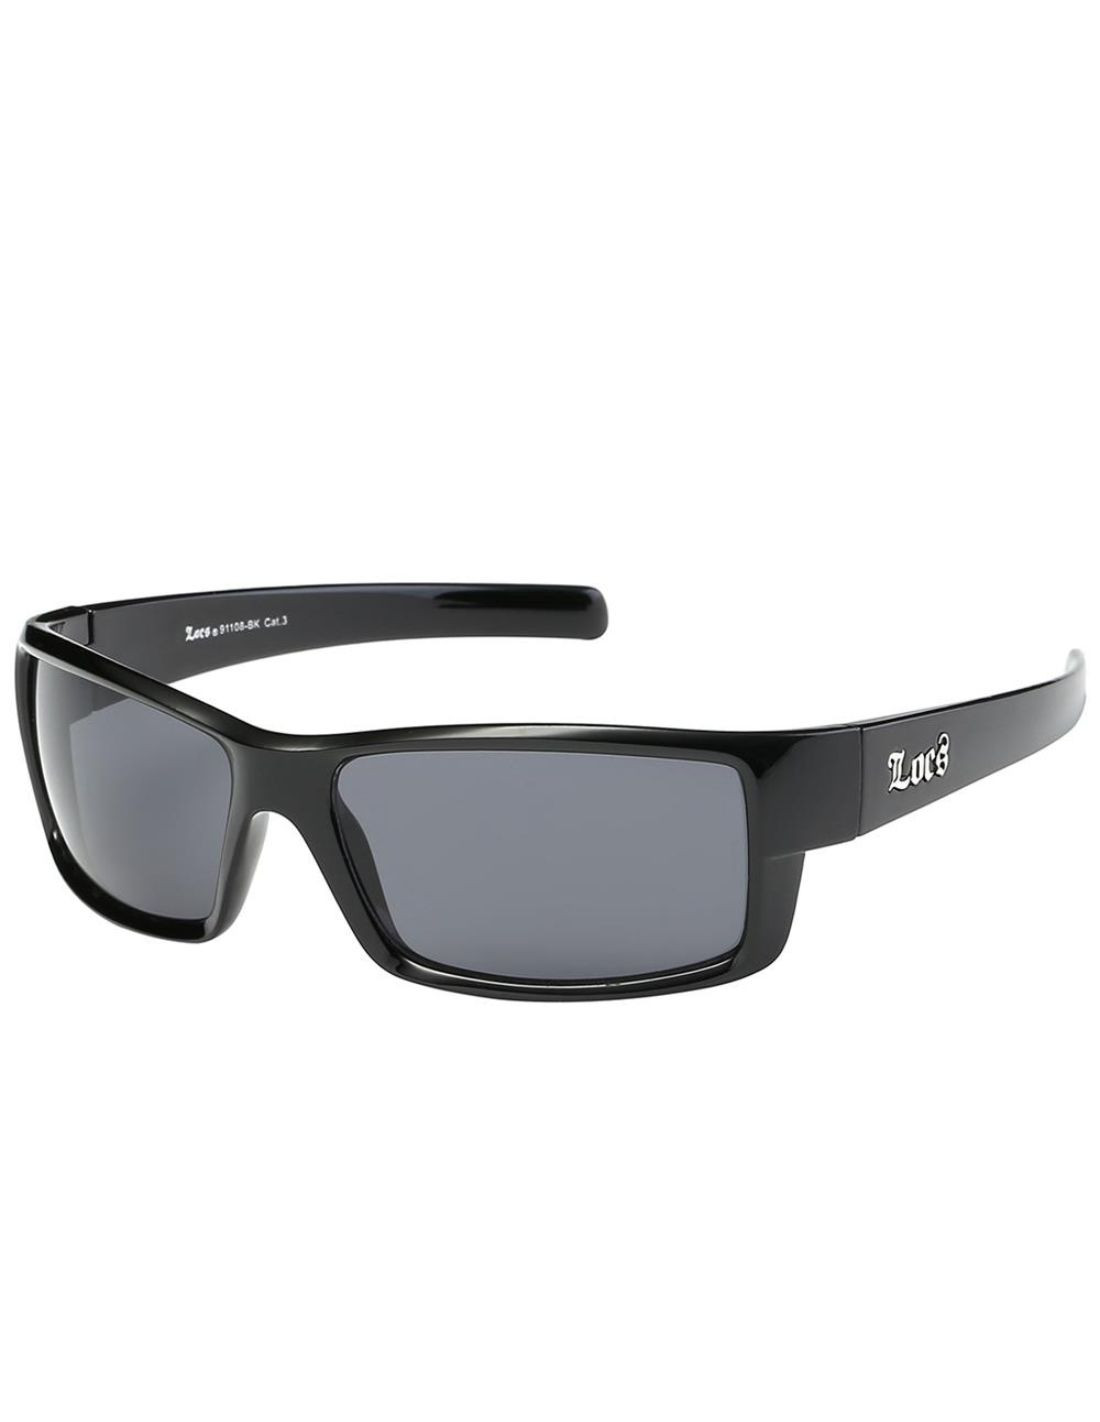 LOCS Logo Sunglasses Black - 8LOC91108-BK